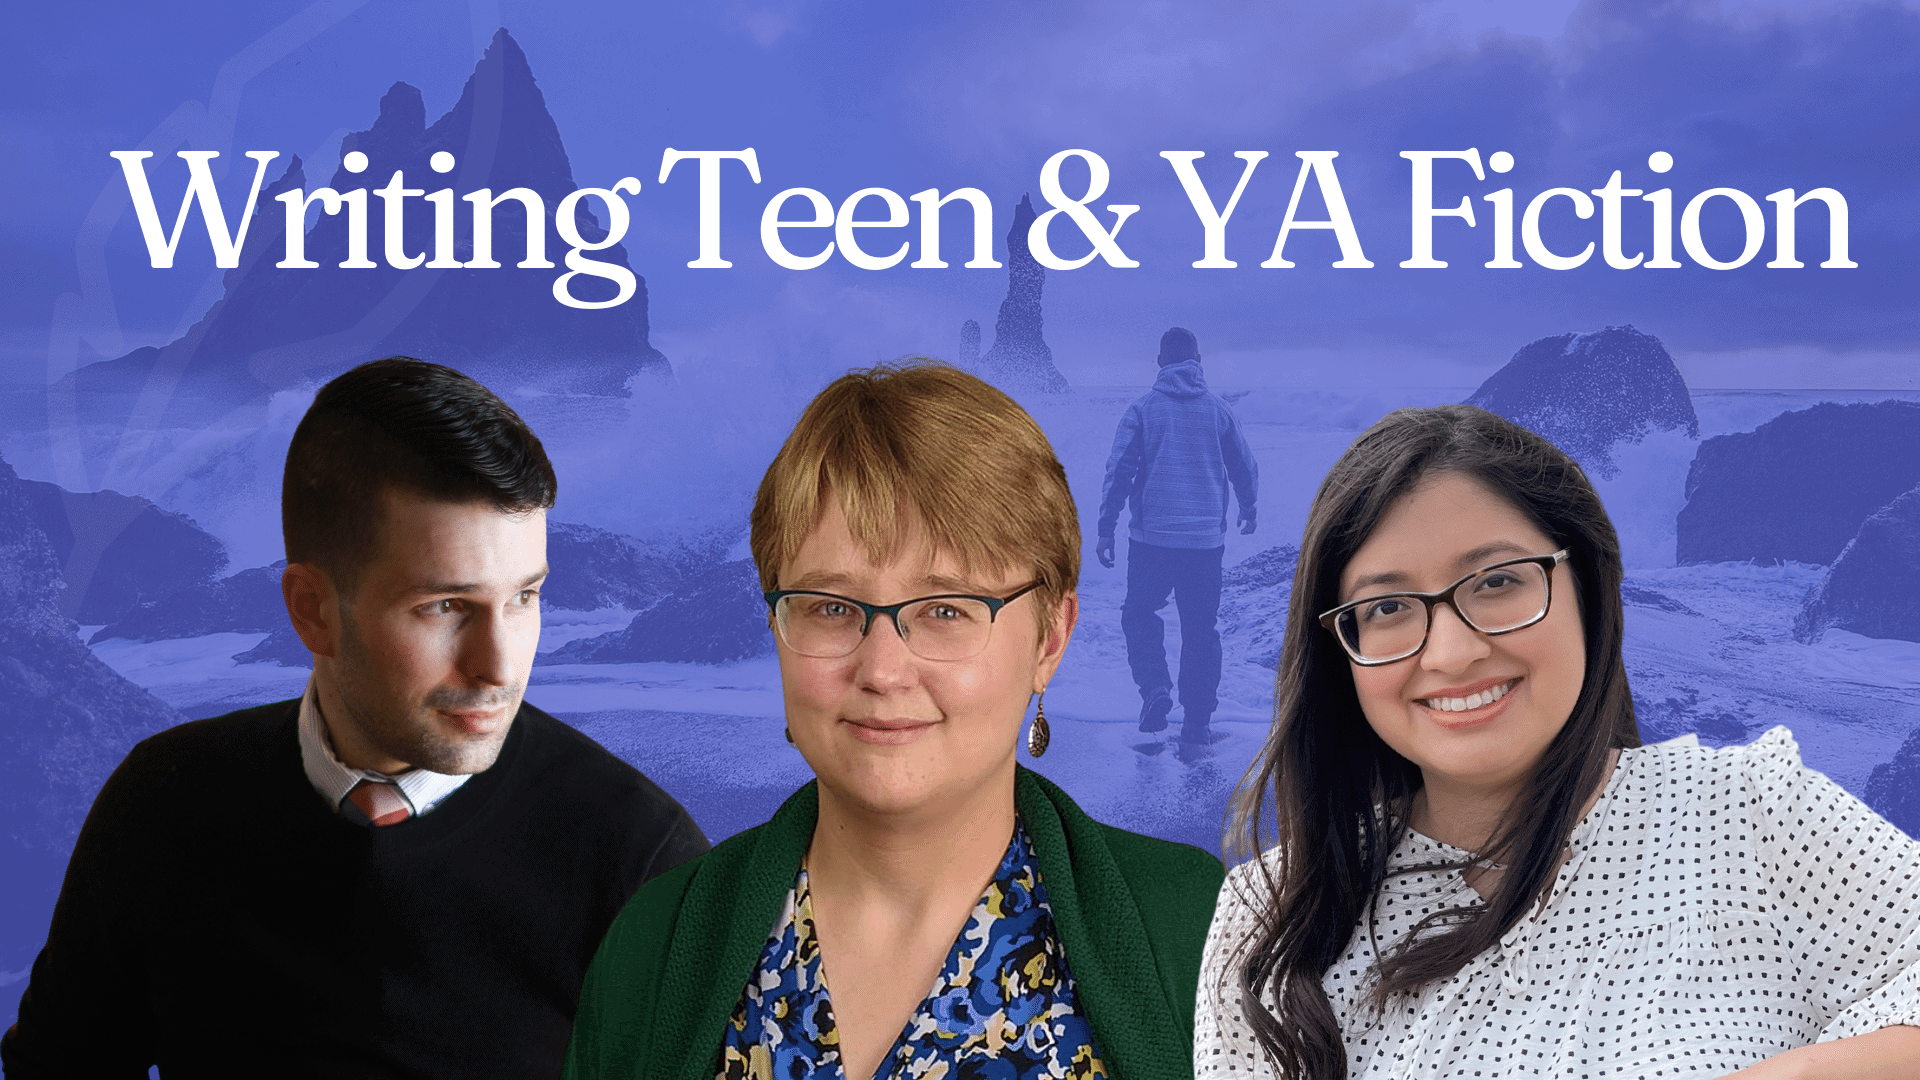 Teen & YA fiction themes and toxic tropes! with Katy Campbell, Citlalin Ossio, & Dominic de Souza